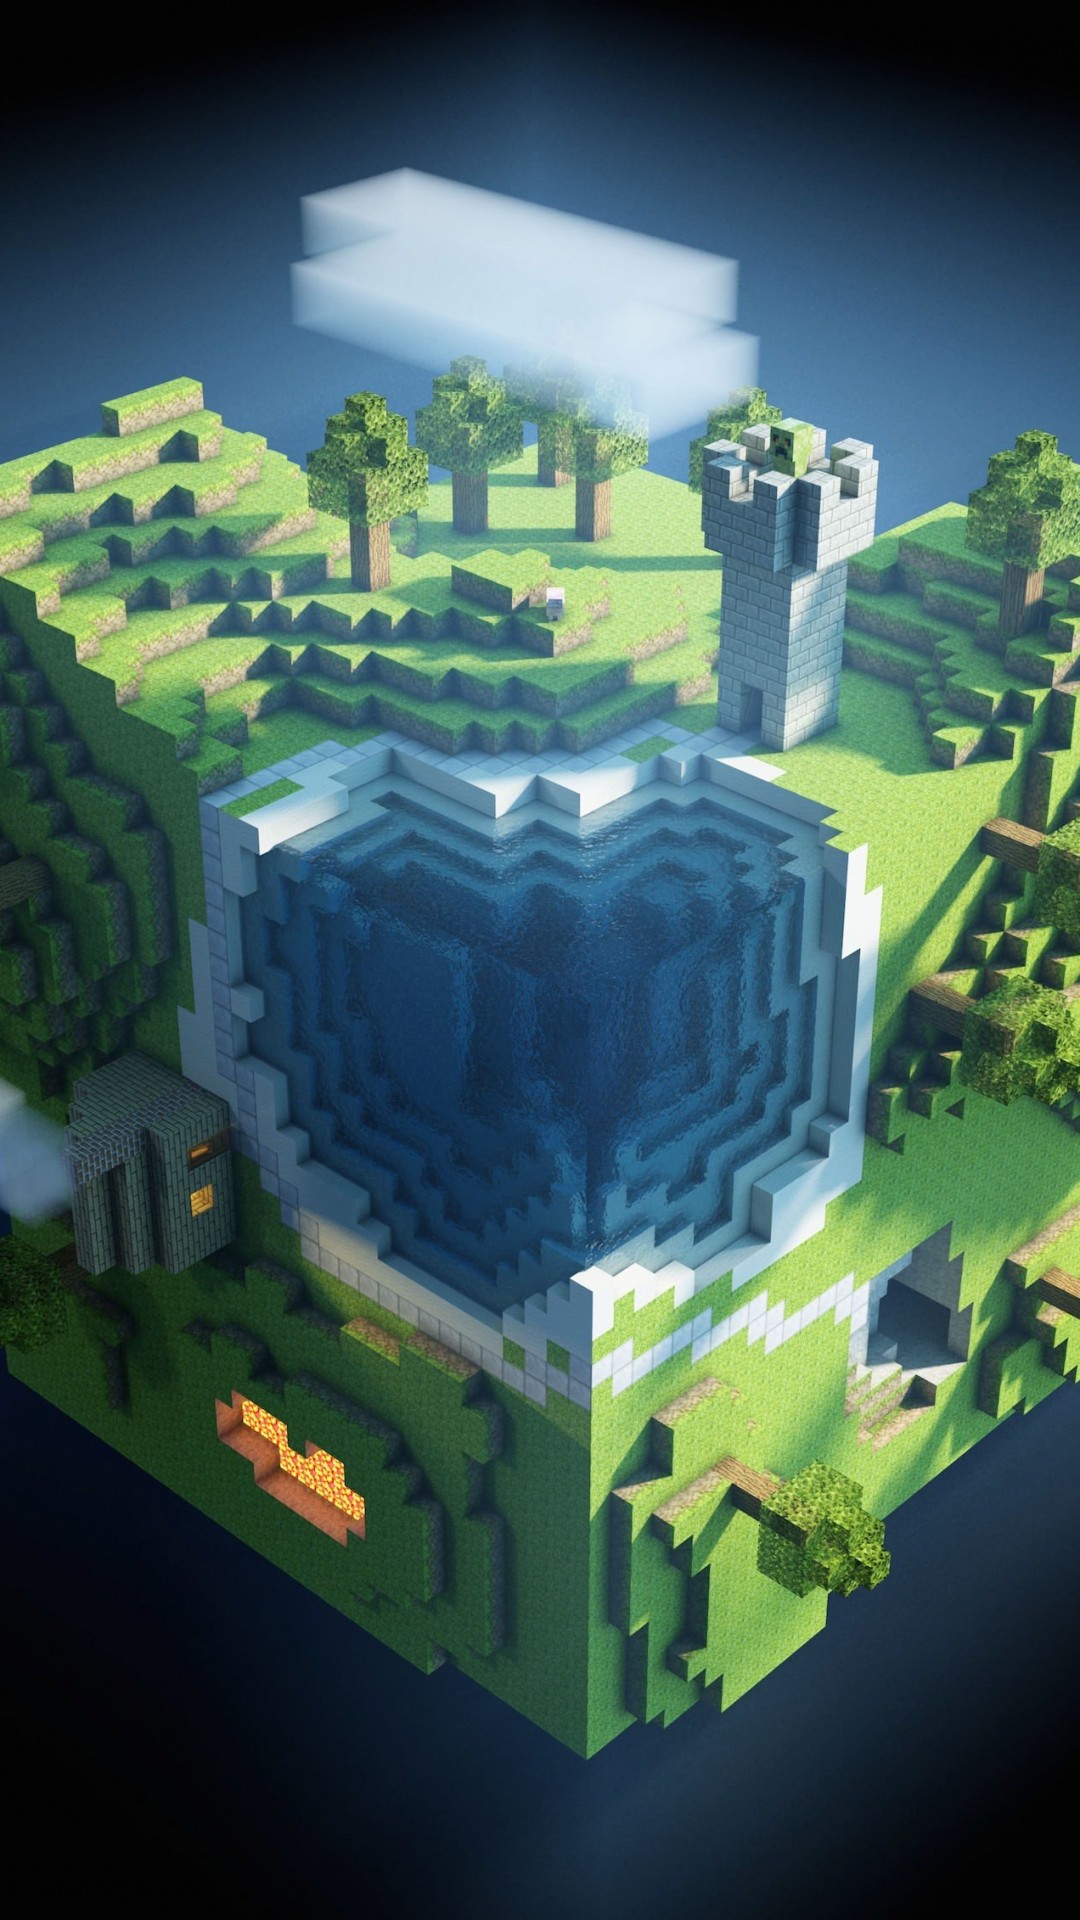 Planet Minecraft Wallpaper for SAMSUNG Galaxy S5